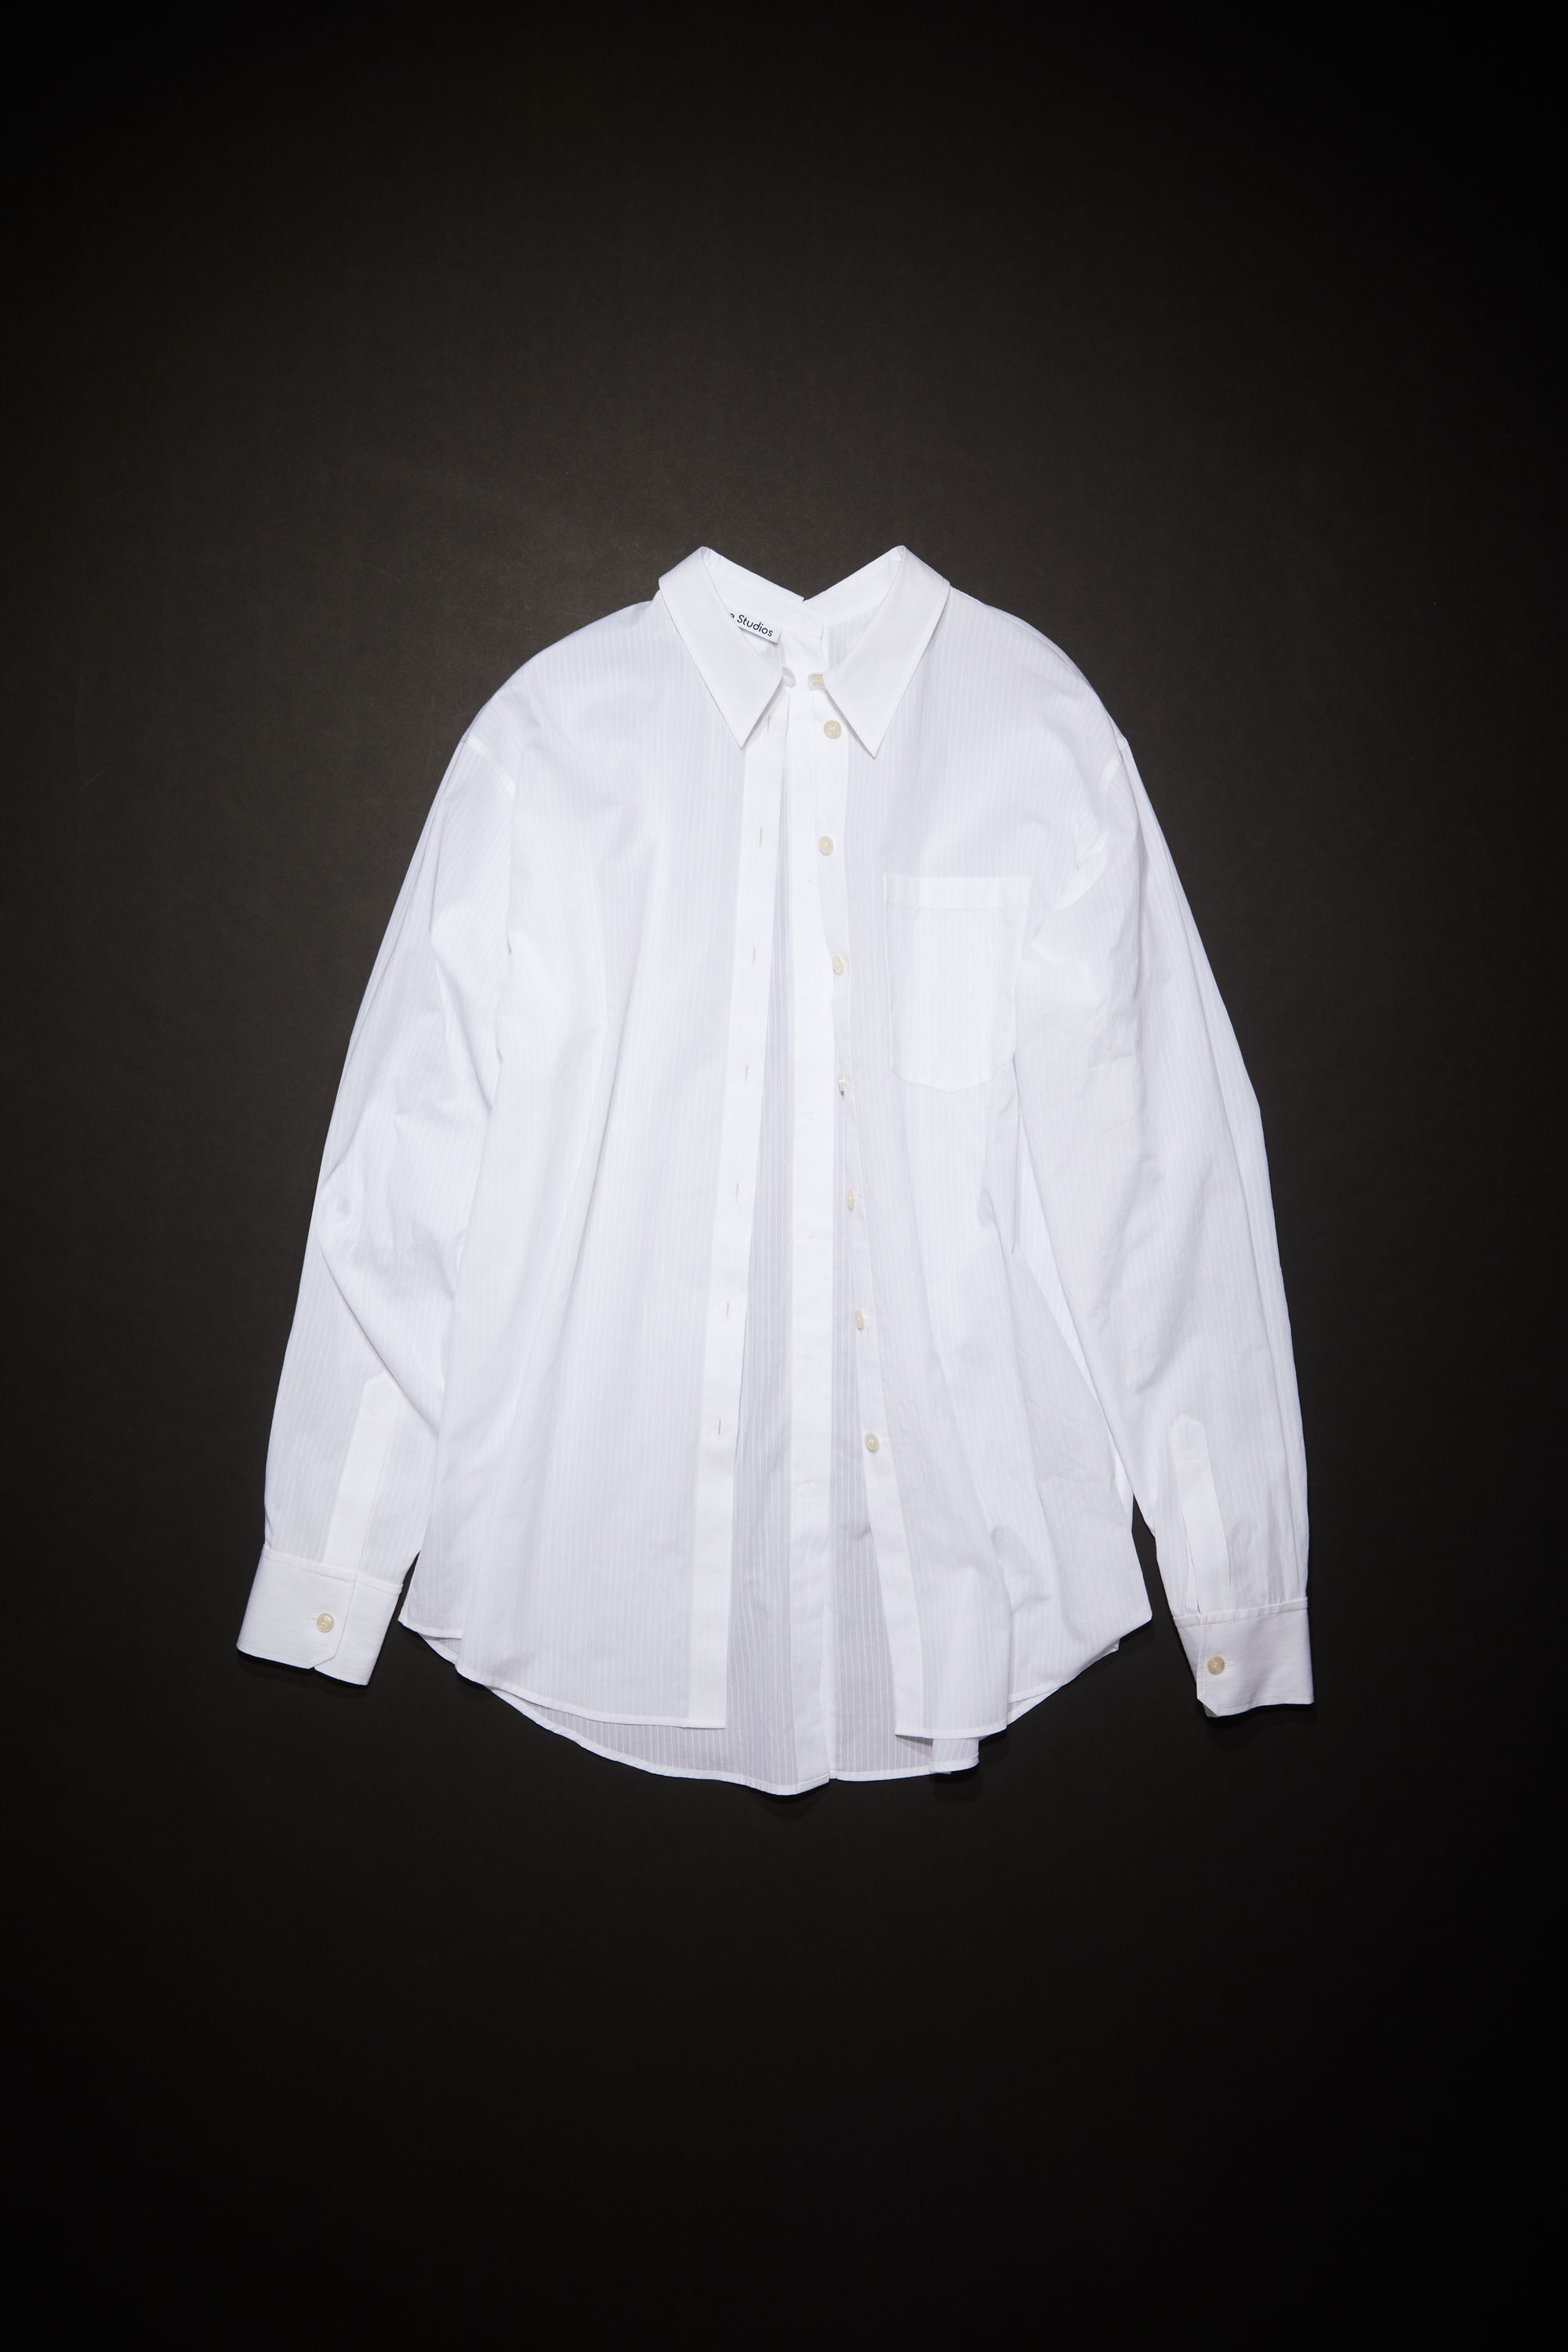 Acne Studios - Striped button-up shirt - White